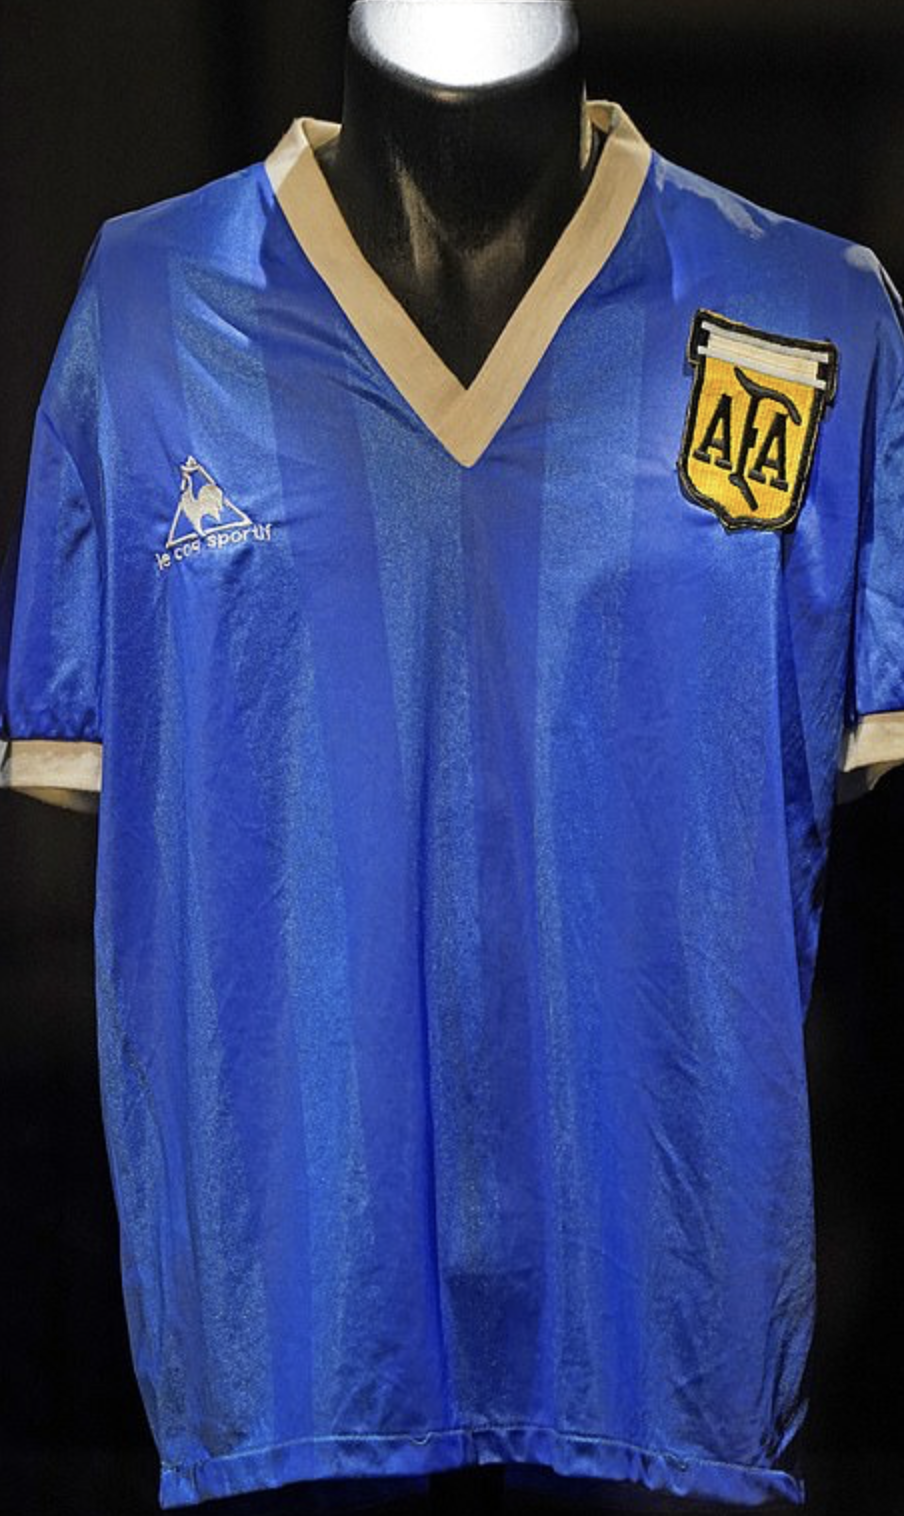 Maradona’s ‘Hand of God’ jersey sells for record price – VAMOS